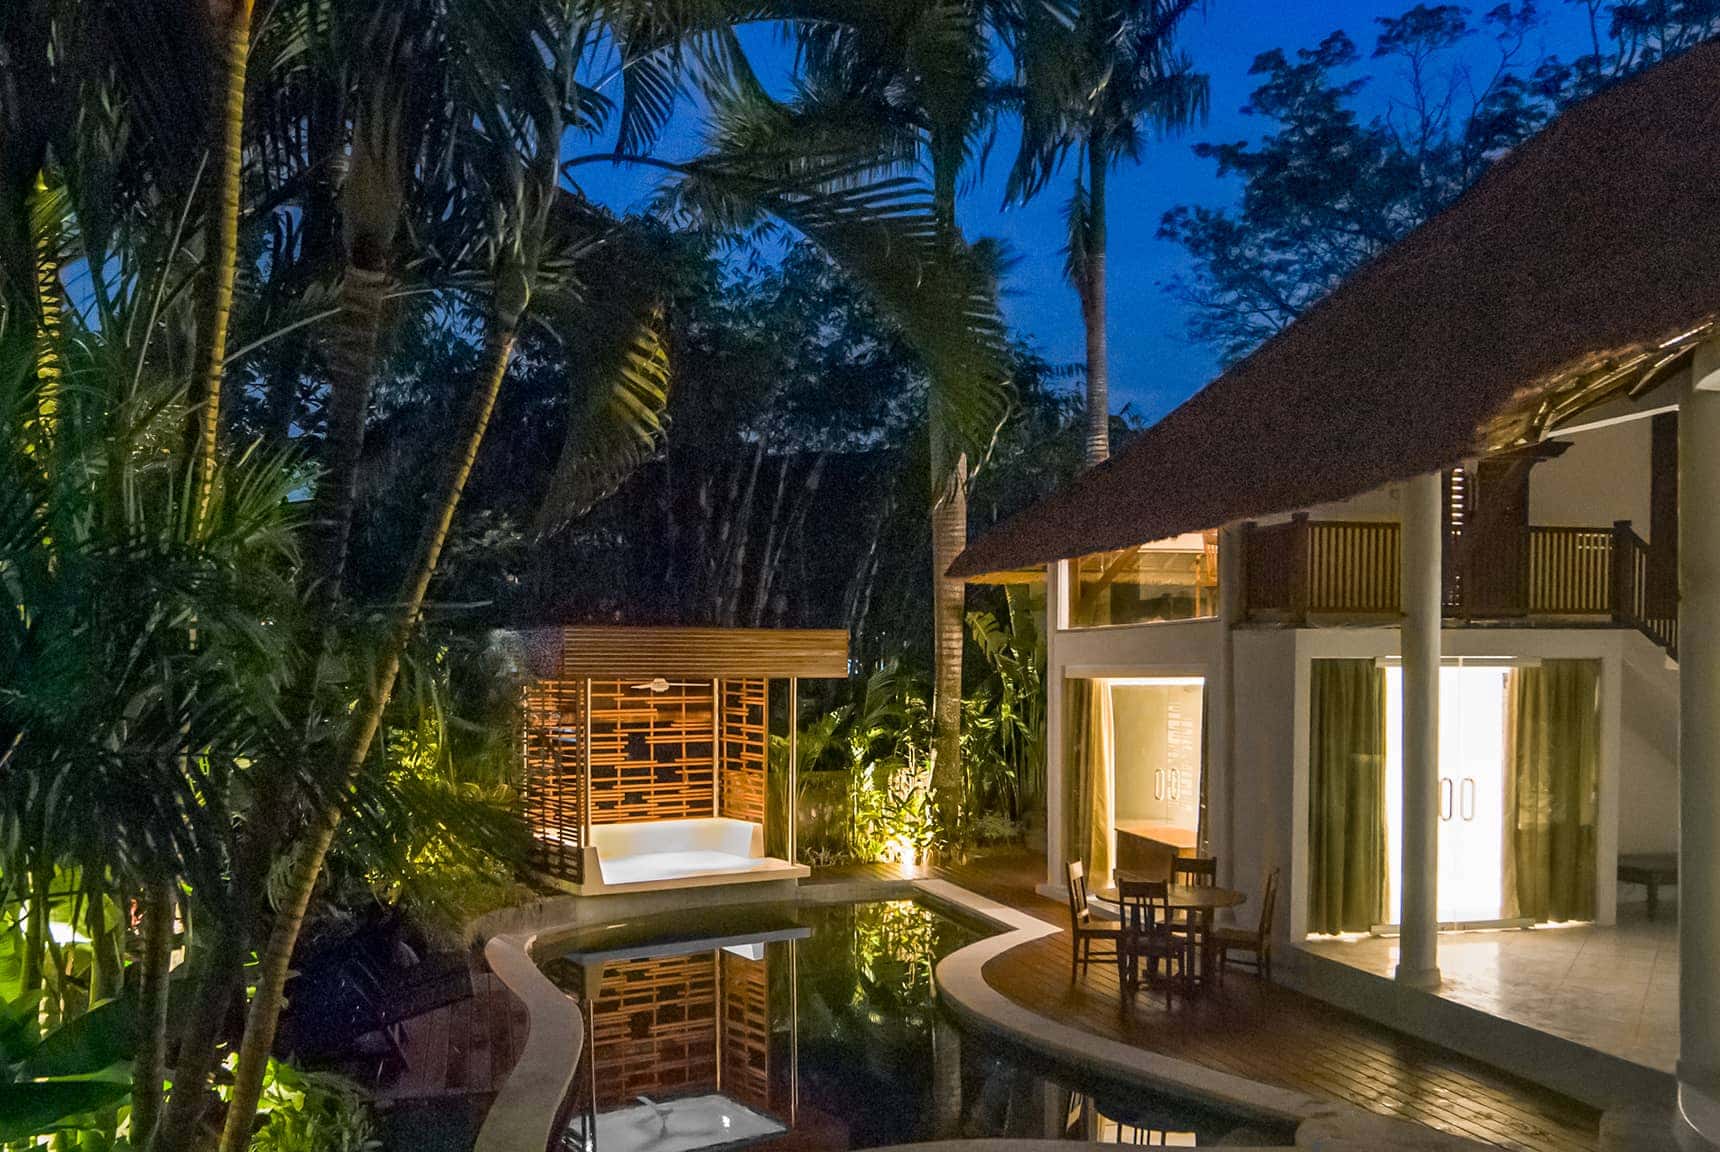 Esha Villas - Seminyak, Bali Indonesia (Bali villa photography by master photographer Rick Carmichael of LuxViz)